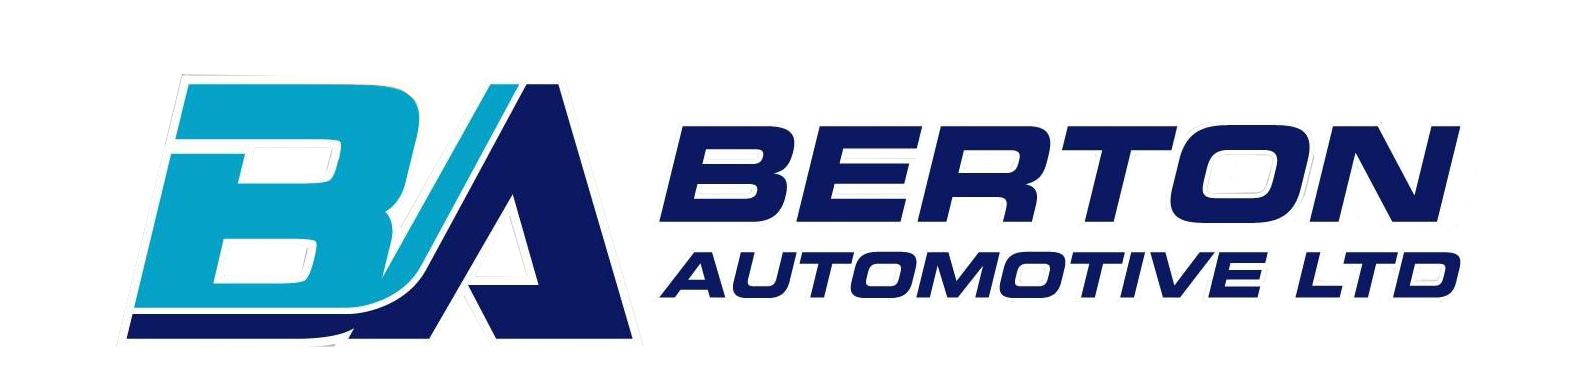 Berton Automotive Logo